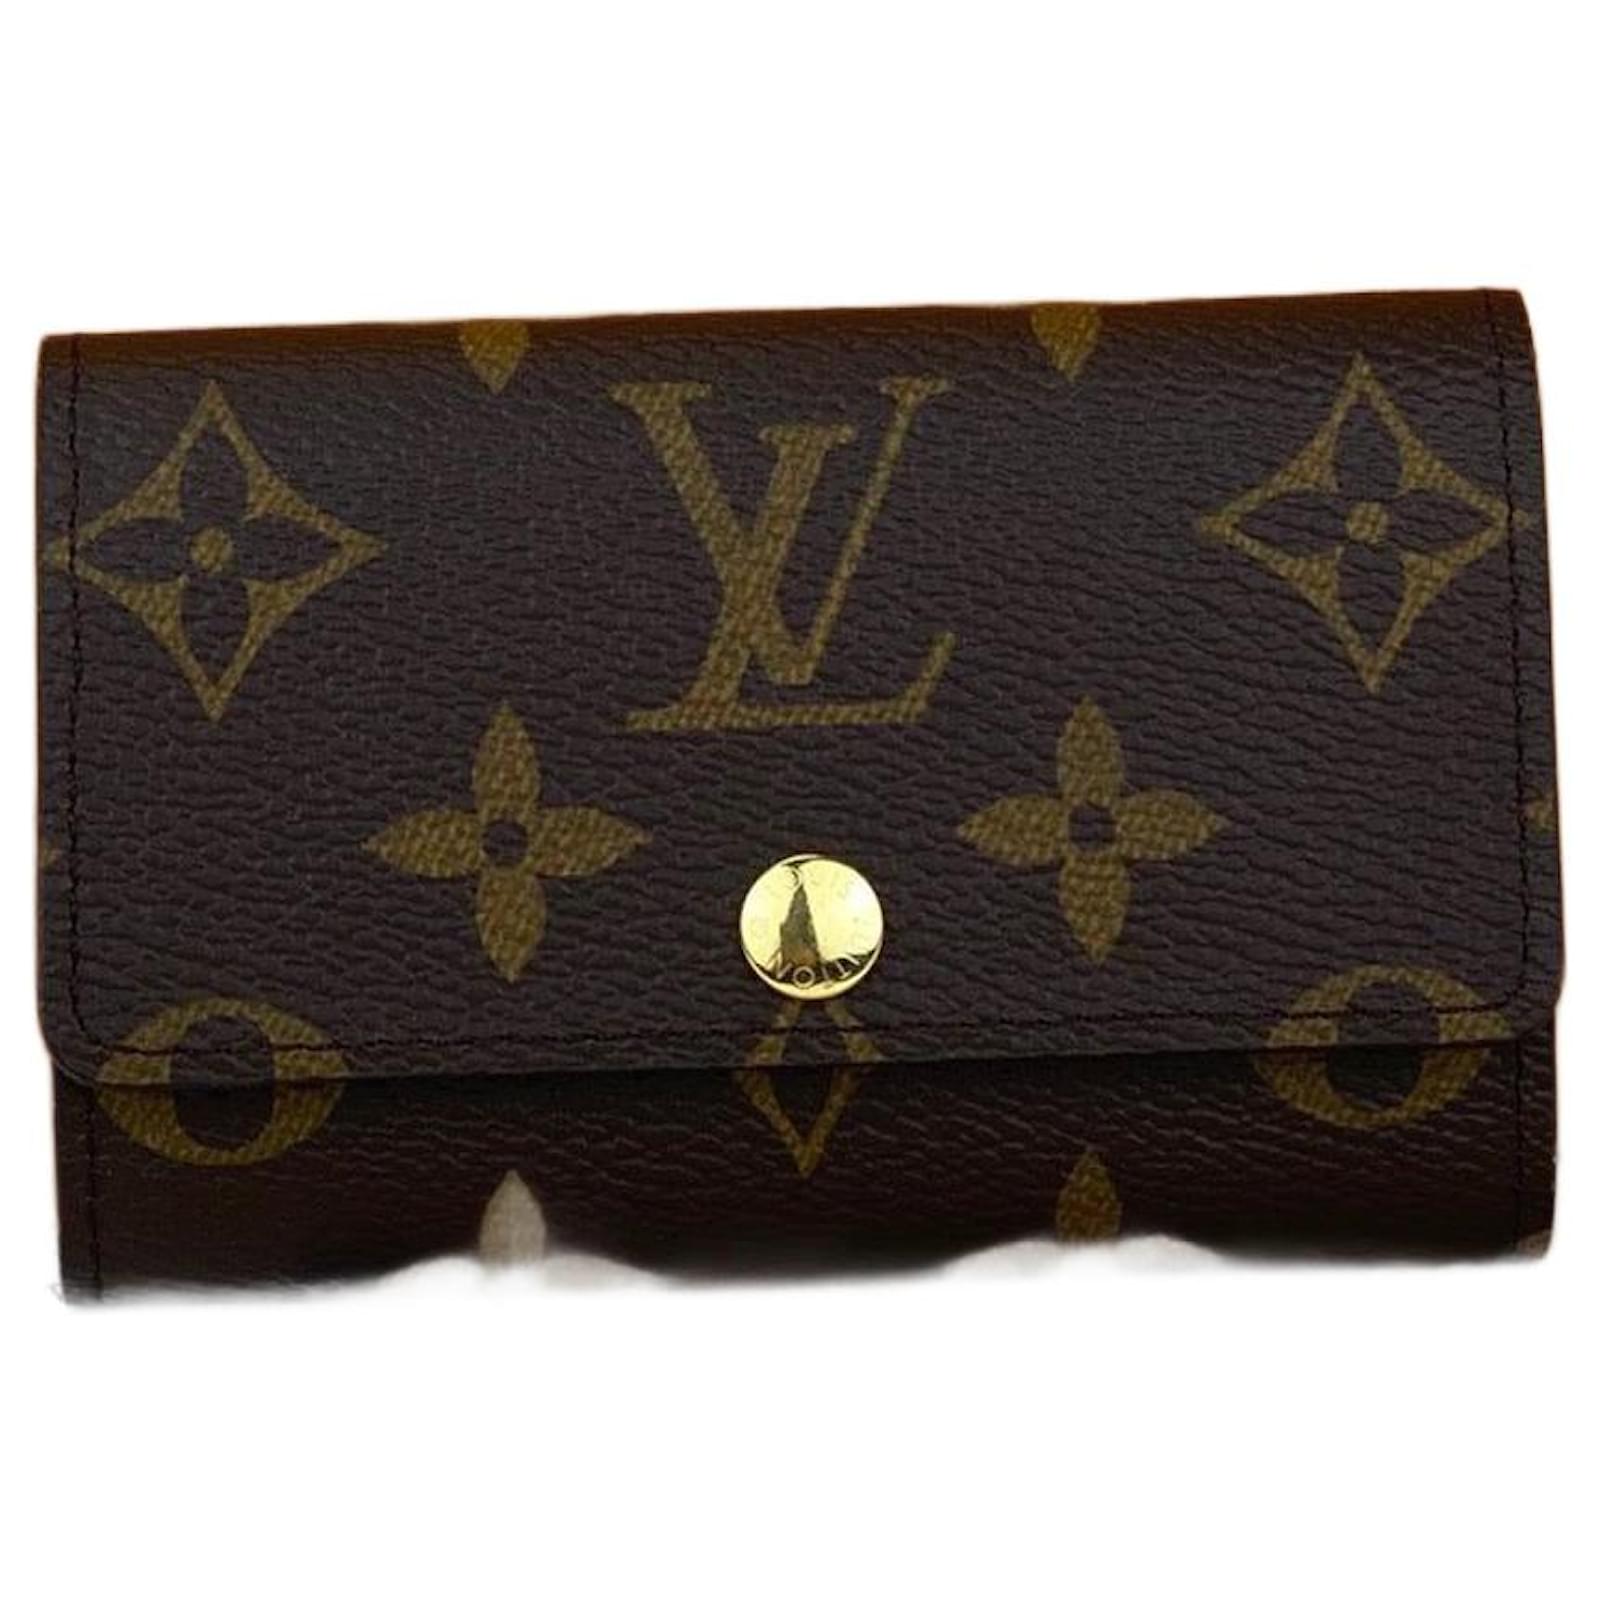 Louis Vuitton 6 Key Holder Monogram Brown Canvas M62630 Key Chain